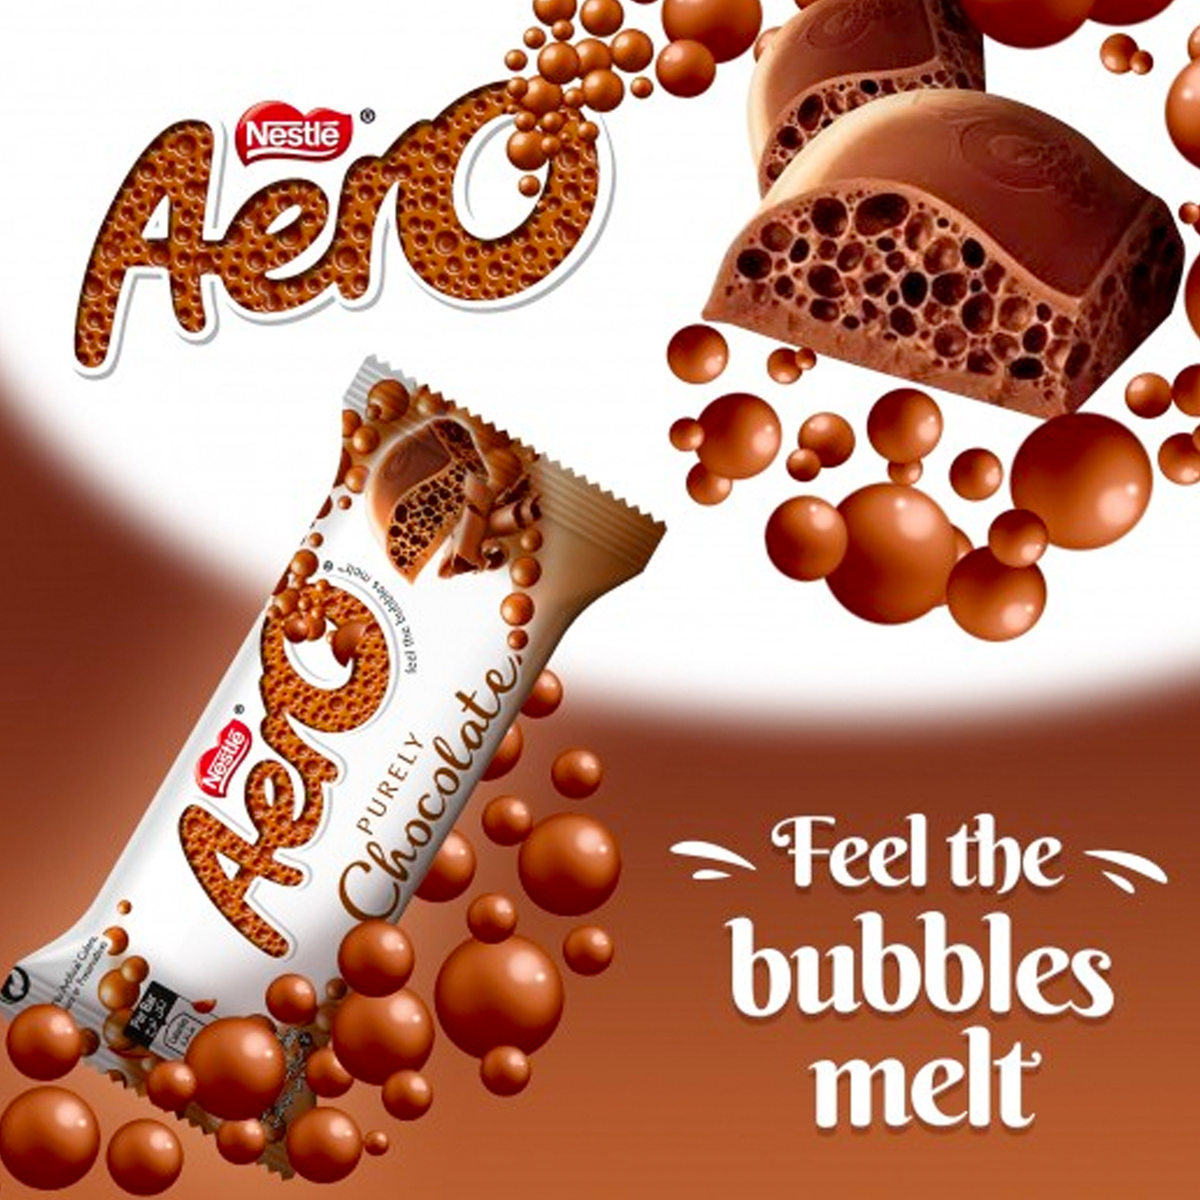 Nestle Aero Purely Milk Chocolate Value Pack 4 x 36 g